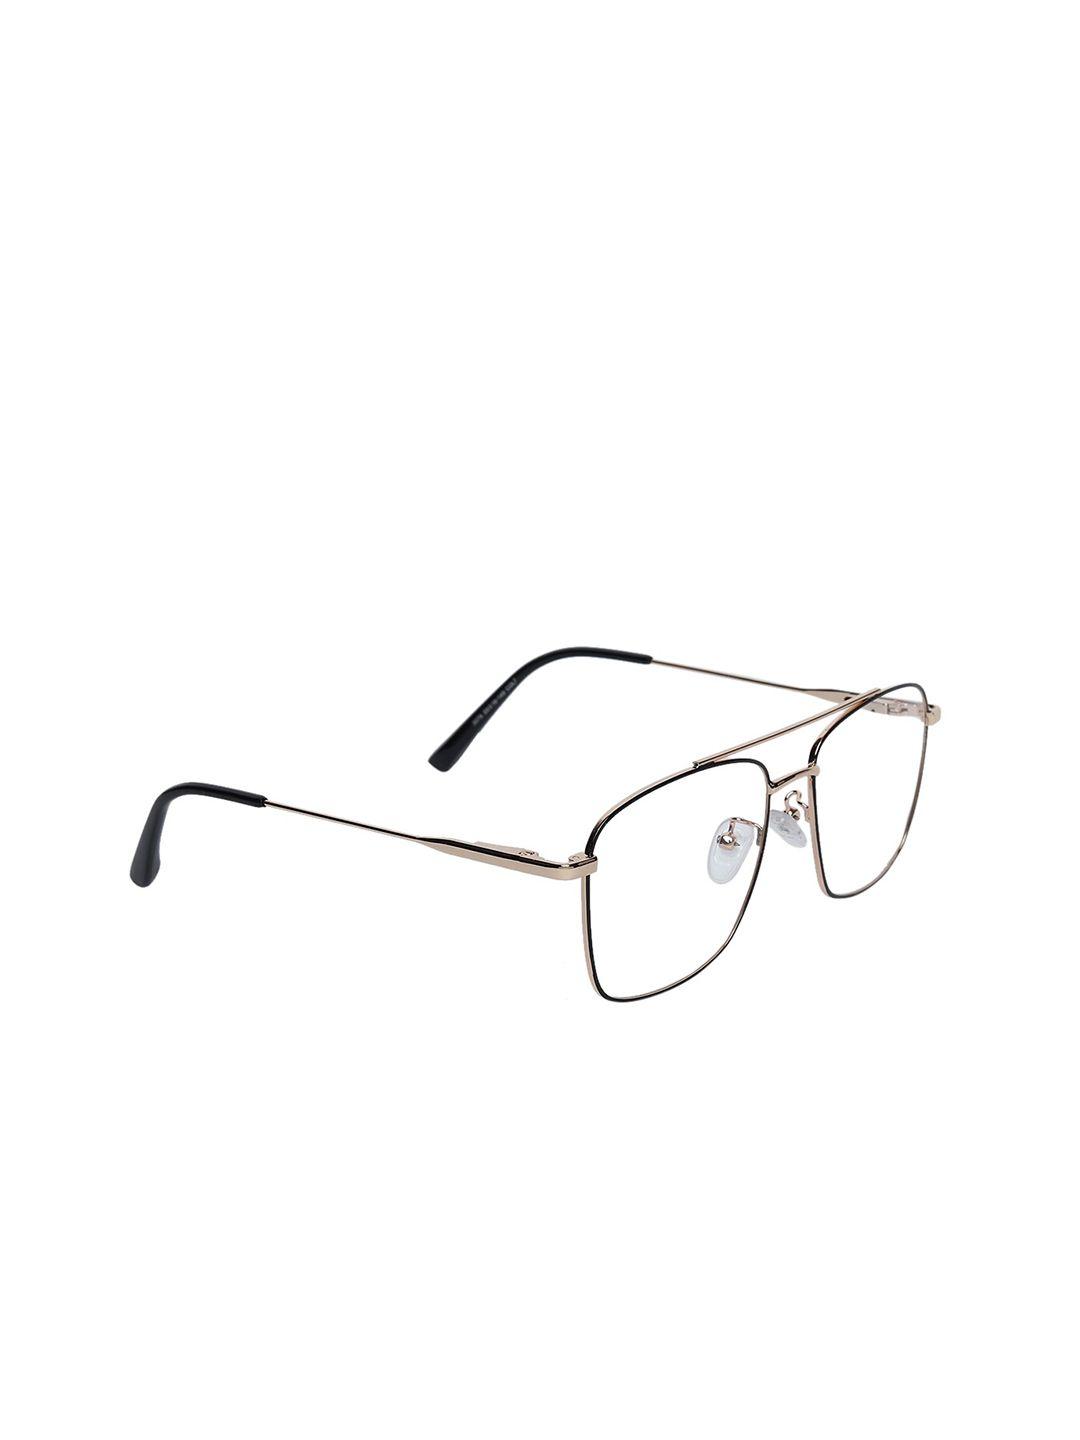 peter jones eyewear unisex black & gold-toned full rim square blue light blocking glasses